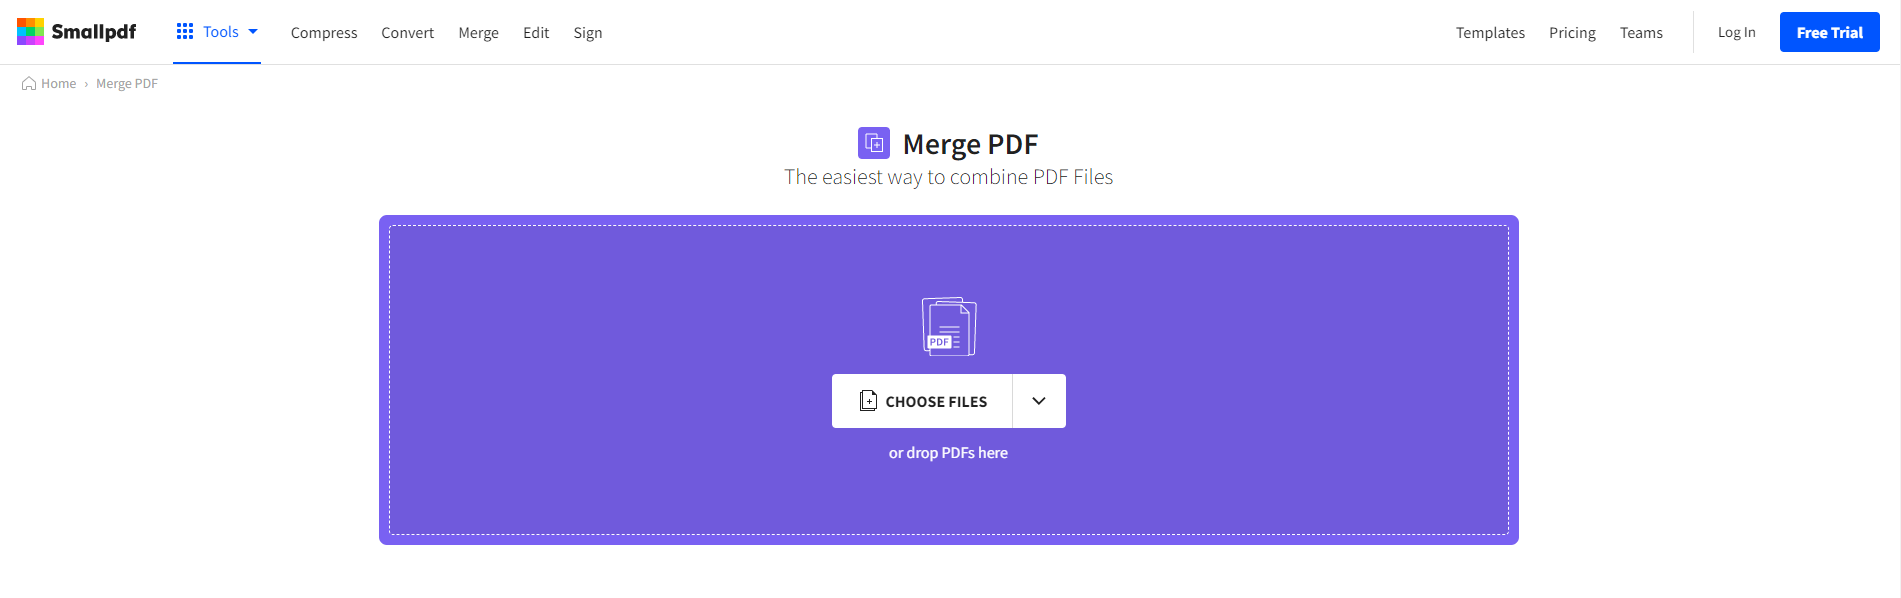 Online PDF Combiner Small PDF